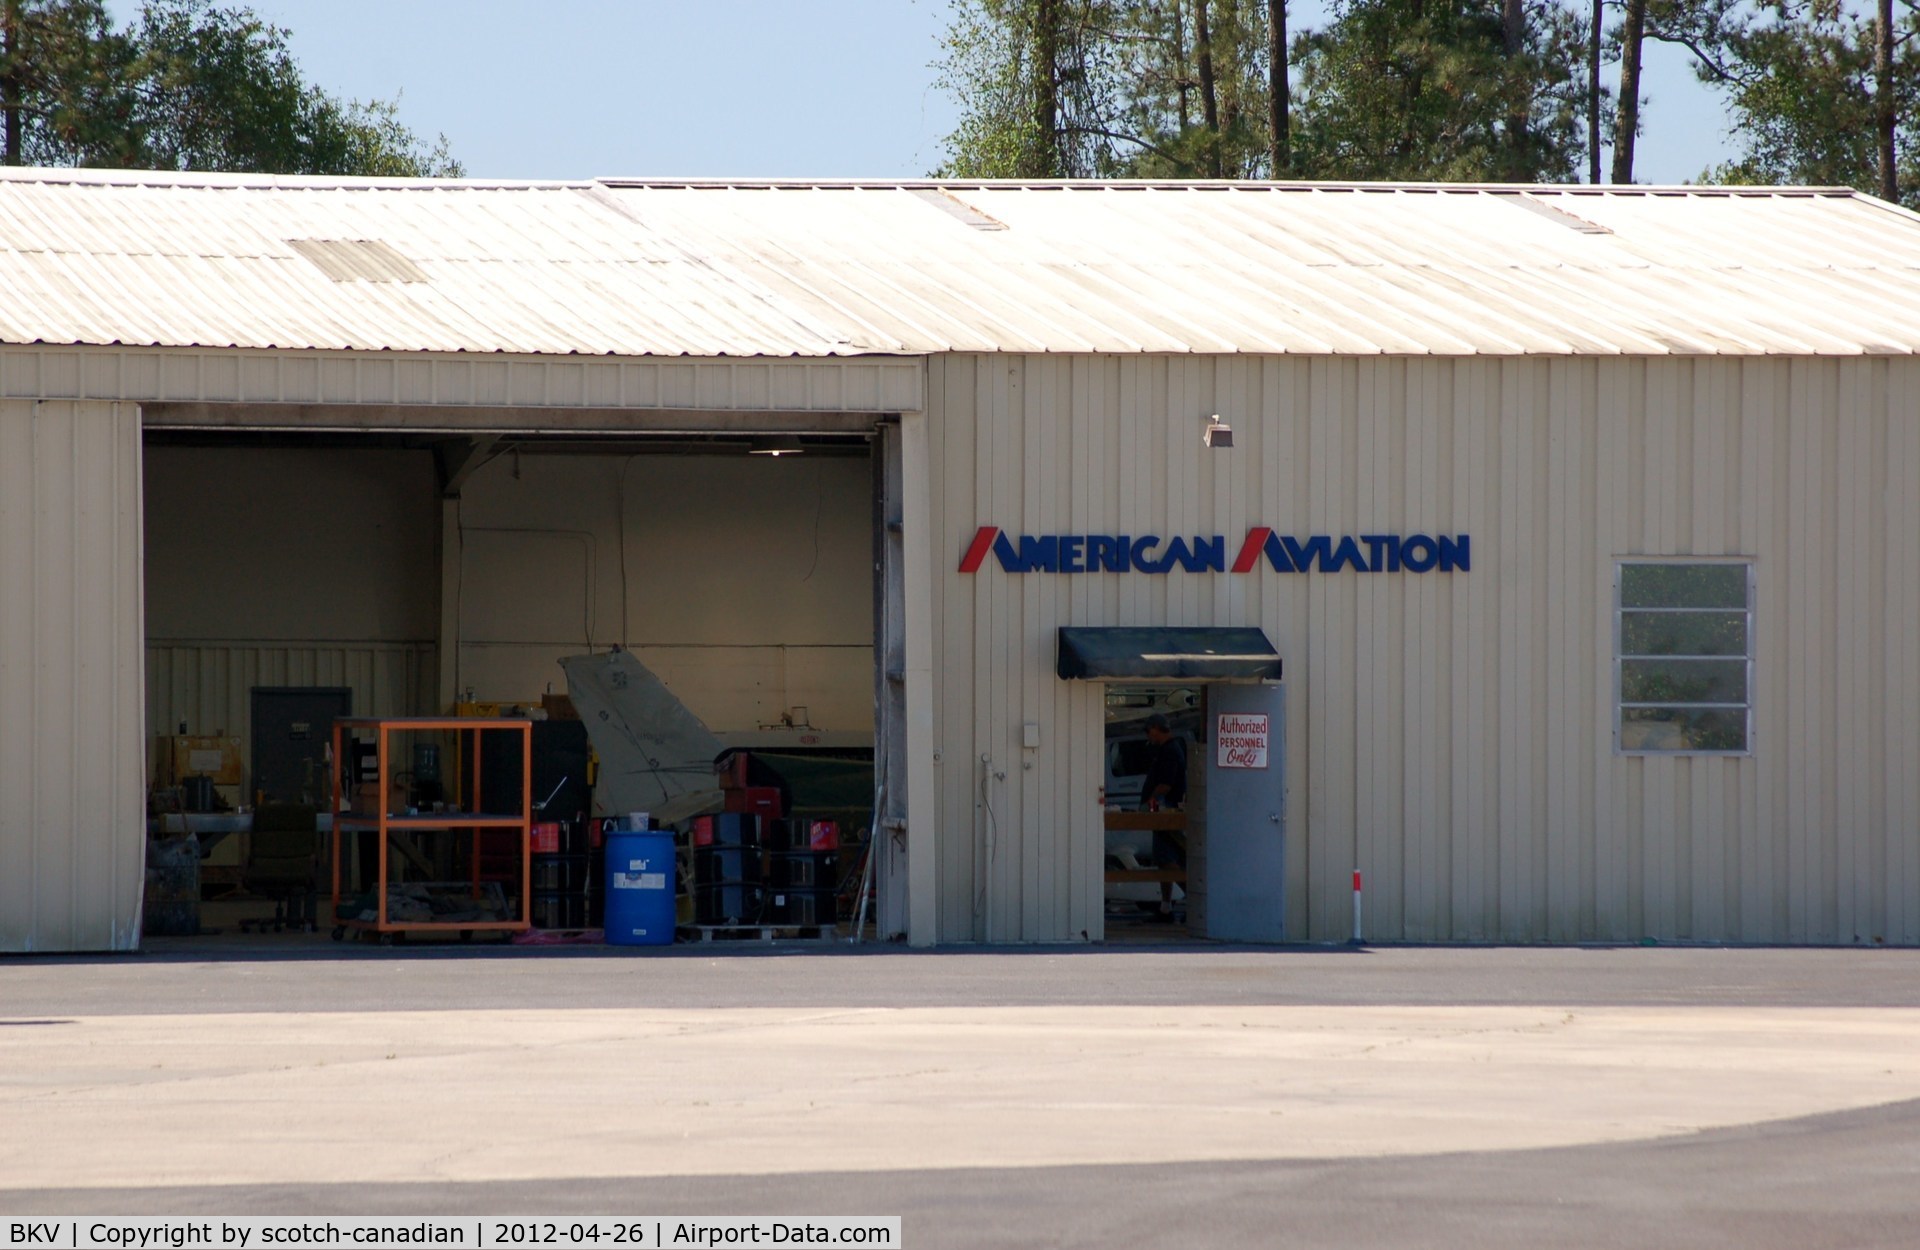 Hernando County Airport (BKV) - American Aviation Hangar at Hernando County Airport, Brooksville, FL  